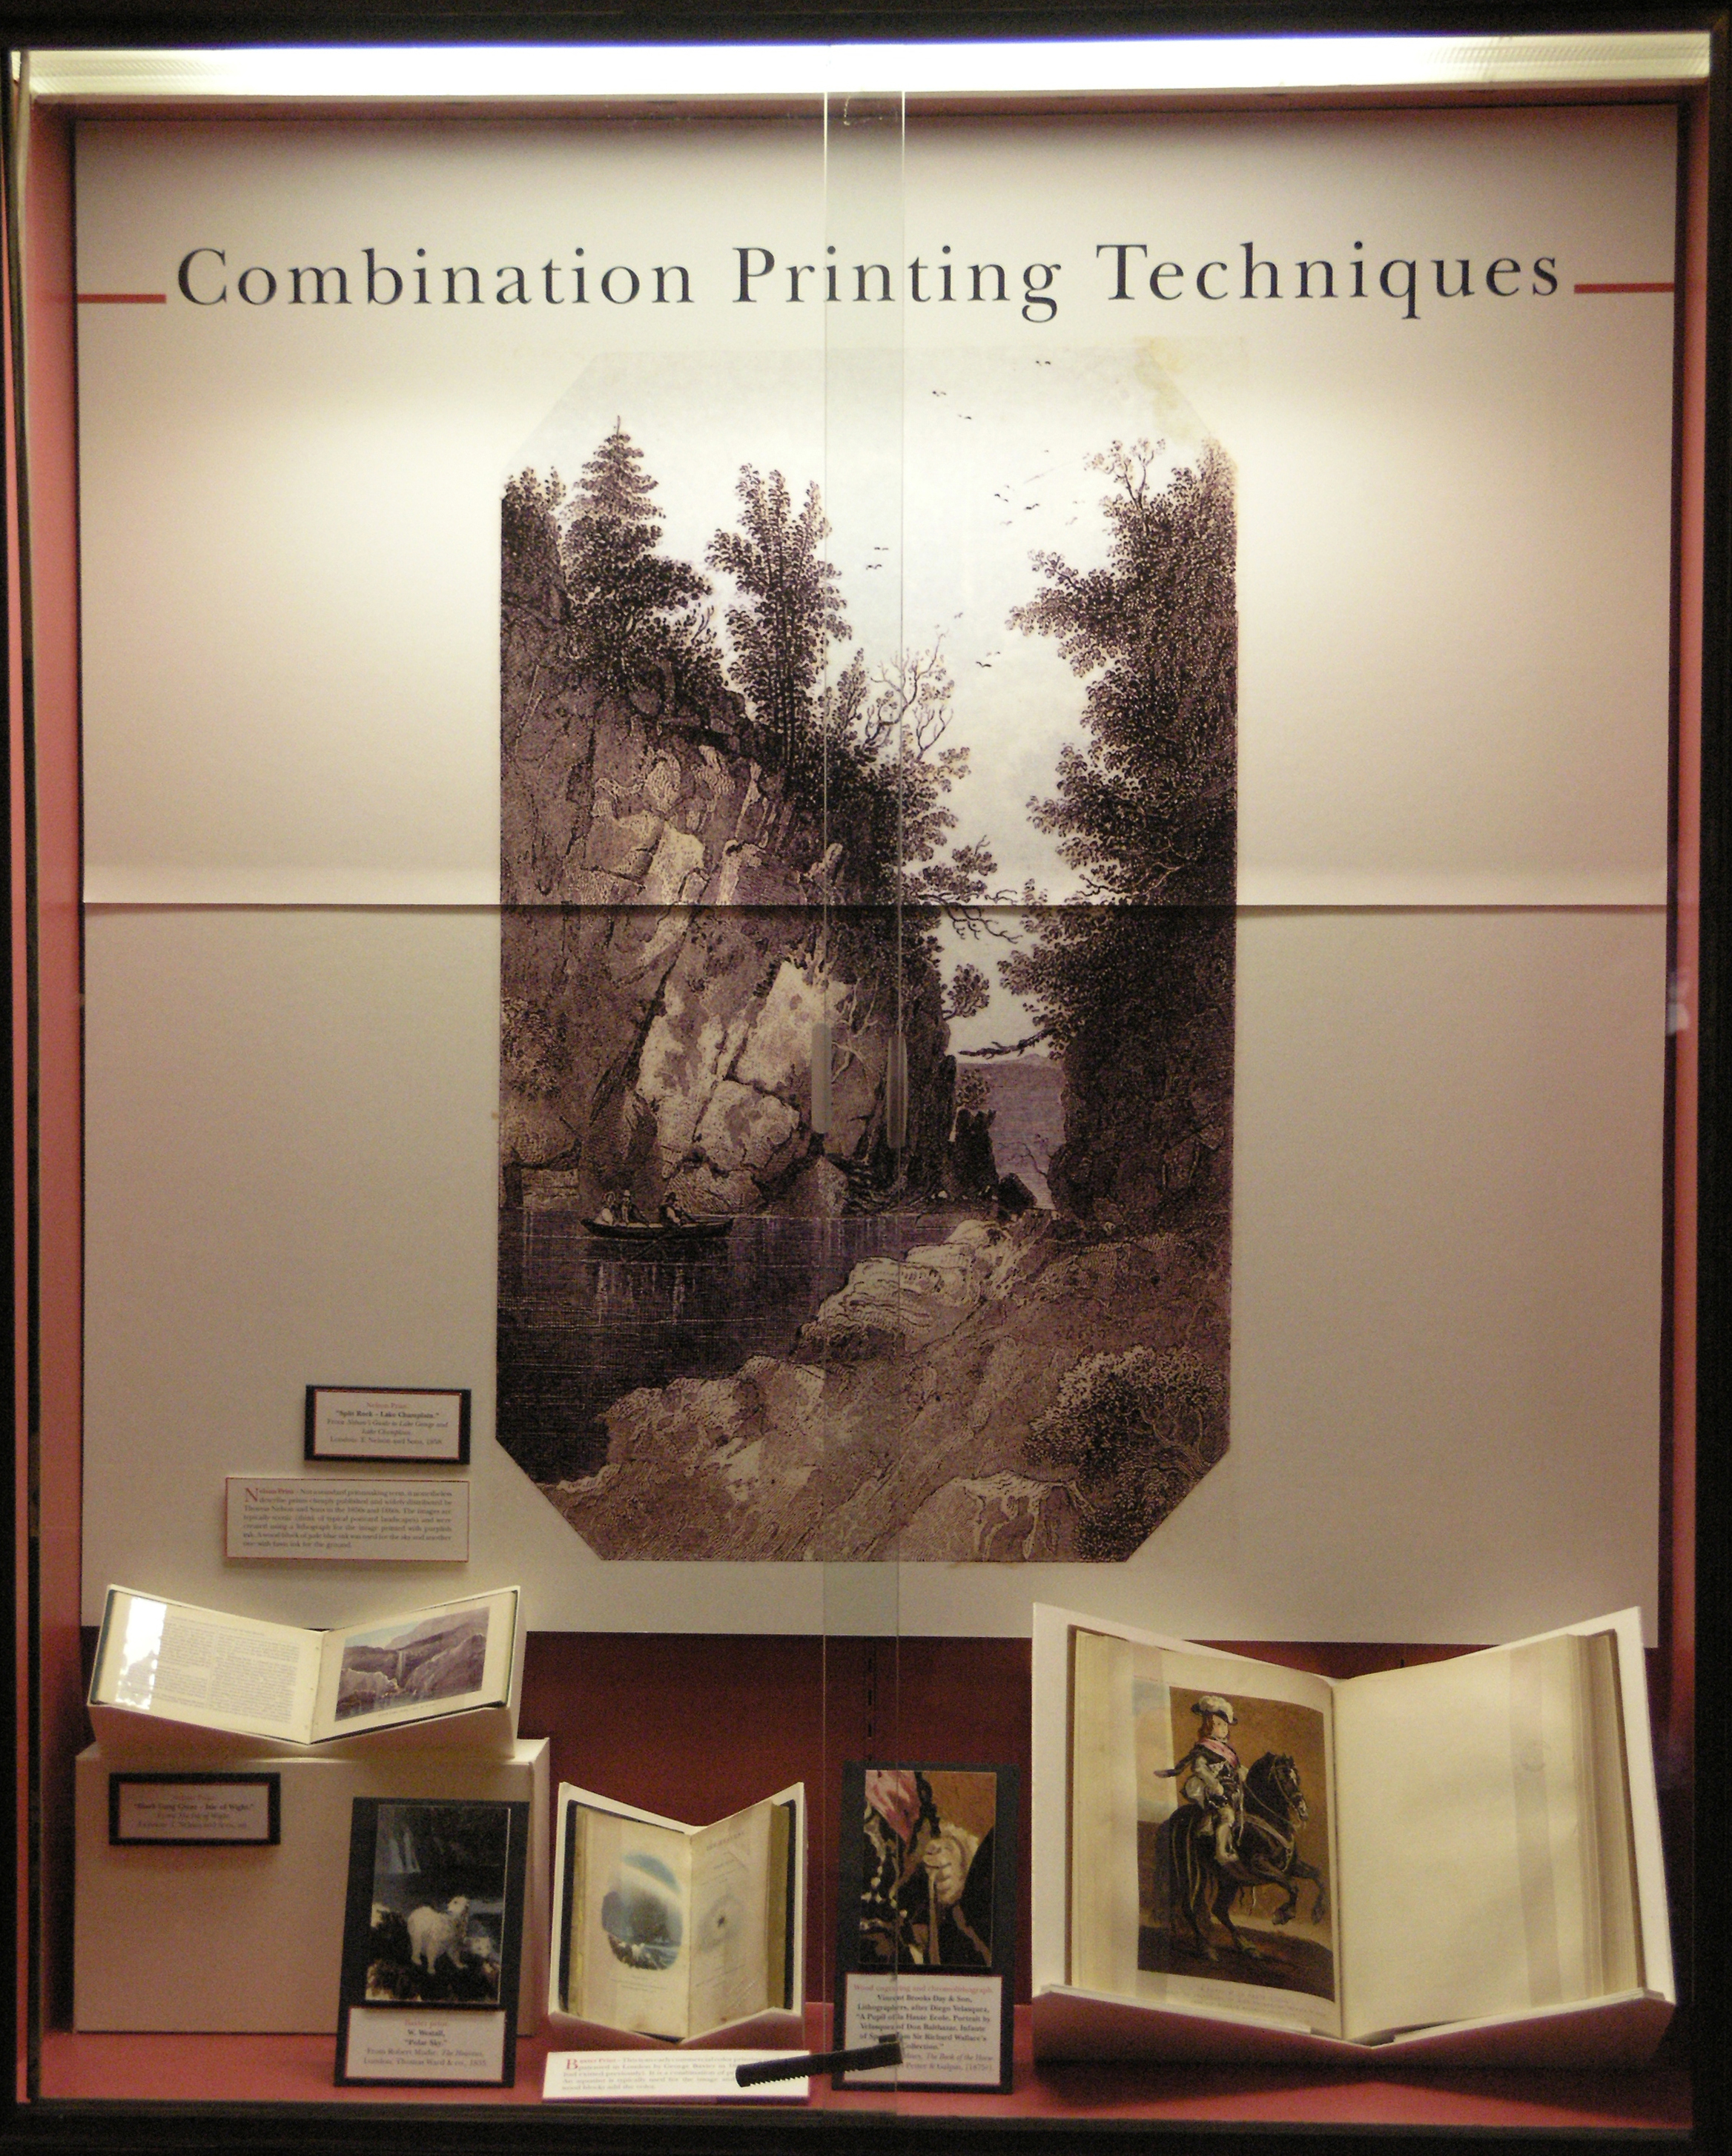 Case 11 - Combination Printing Techniques